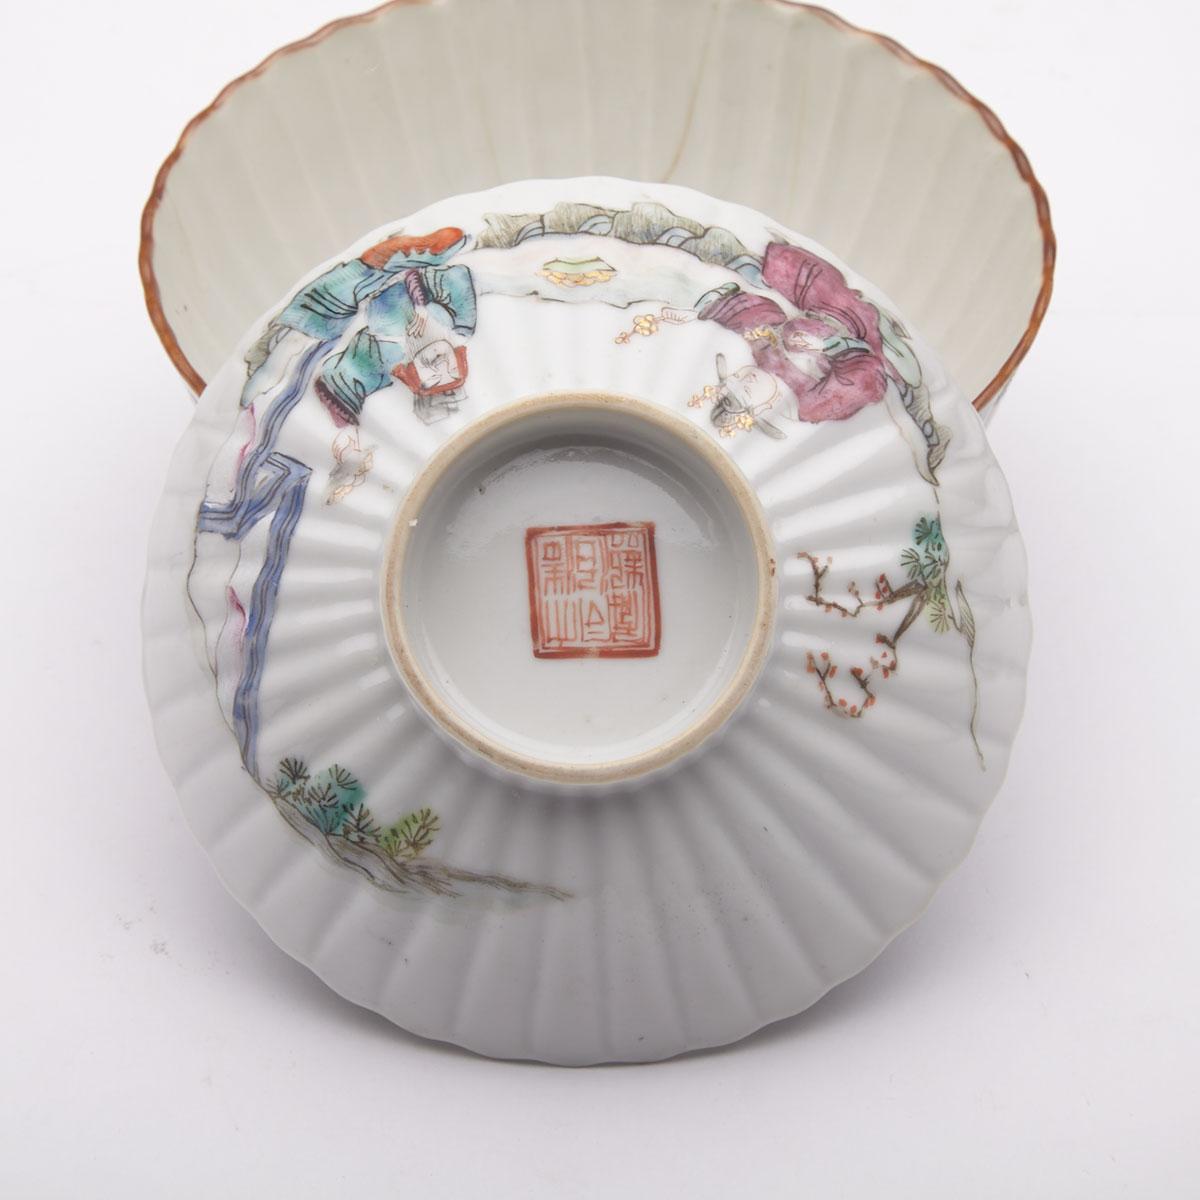 Famille Rose ‘Fu Lu Shou’ Bowl and Cover, Tongzhi Mark and Period (1862-1874)